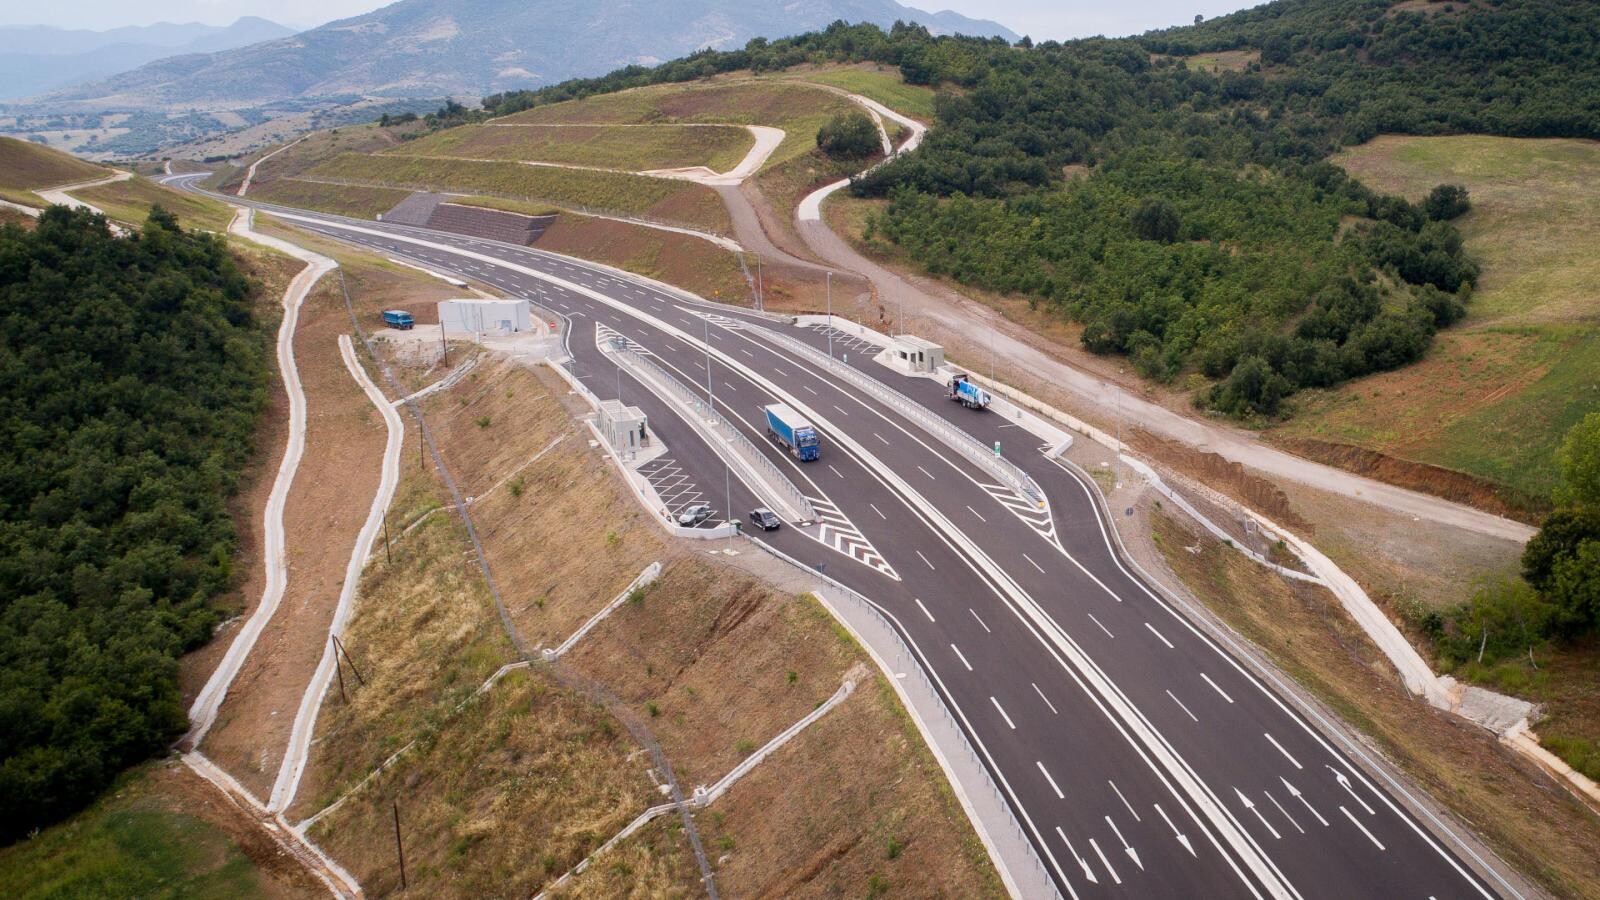 More information about "«Μπλε Διάδρομος»: Στην τελική ευθεία ο οδικός άξονας που θα ενώσει Ελλάδα και Αλβανία"